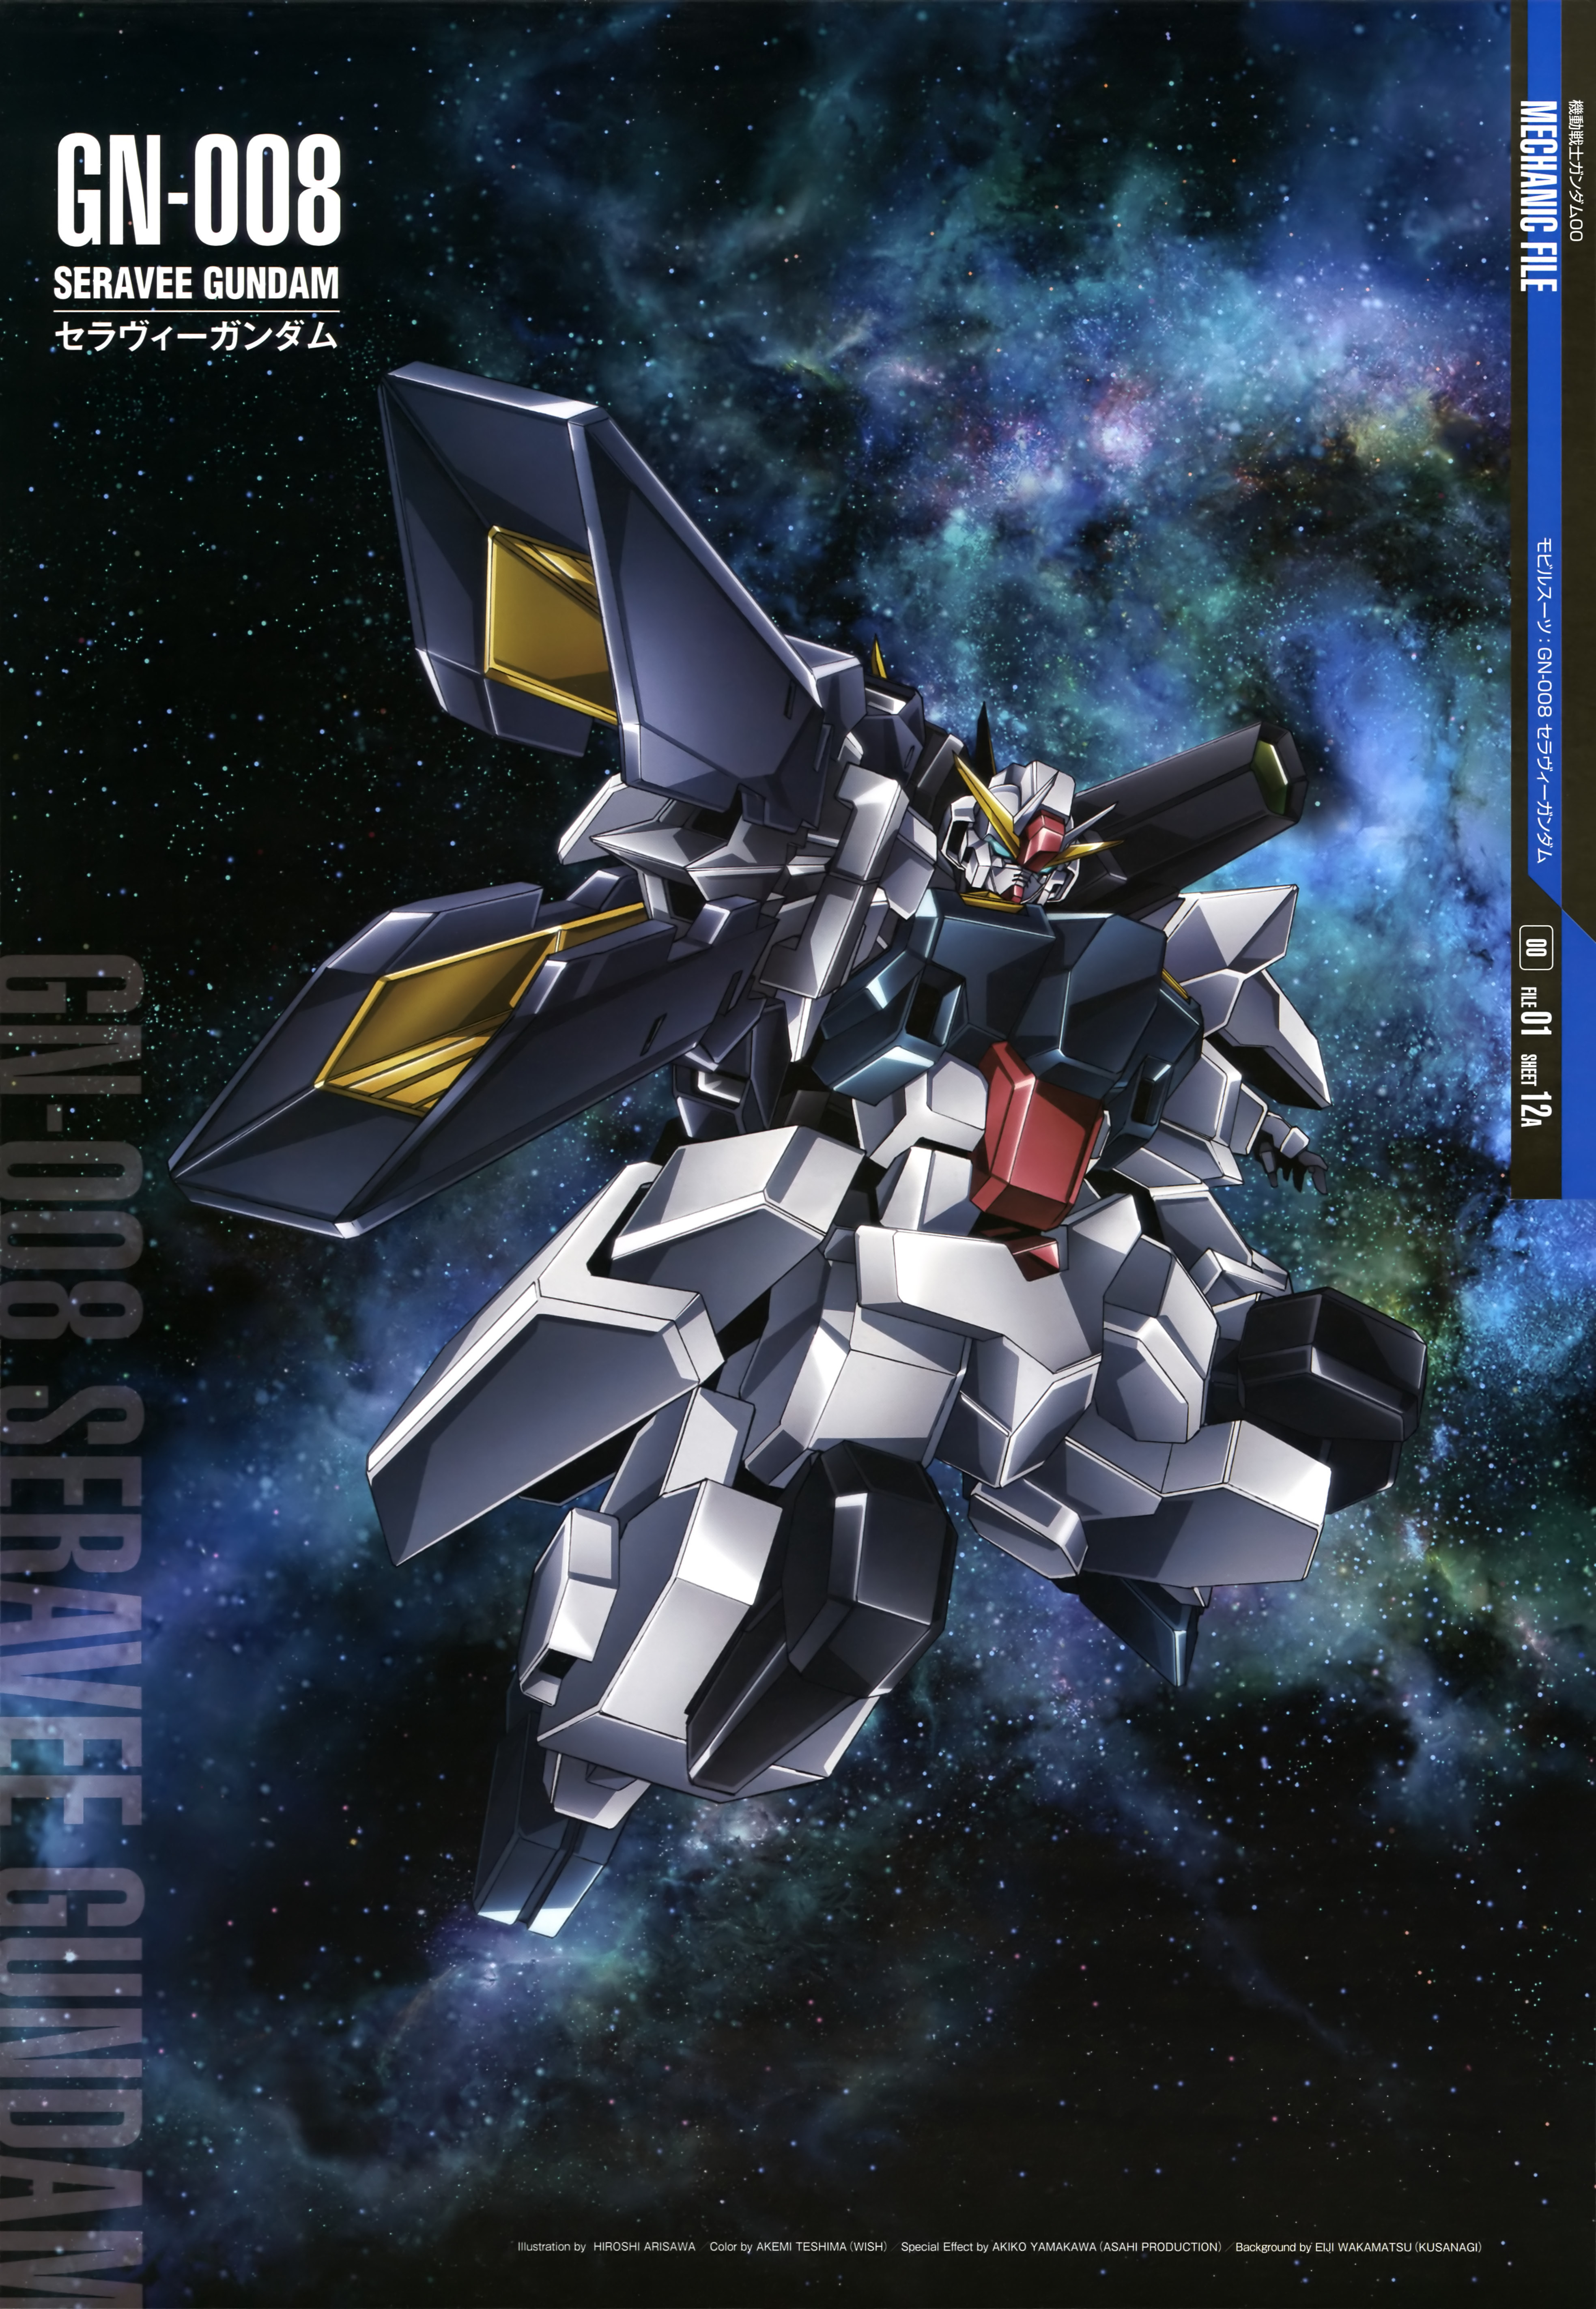 Seravee Gundam Anime Mechs Gundam Mobile Suit Gundam 00 Super Robot Taisen Artwork Digital Art 3934x5692